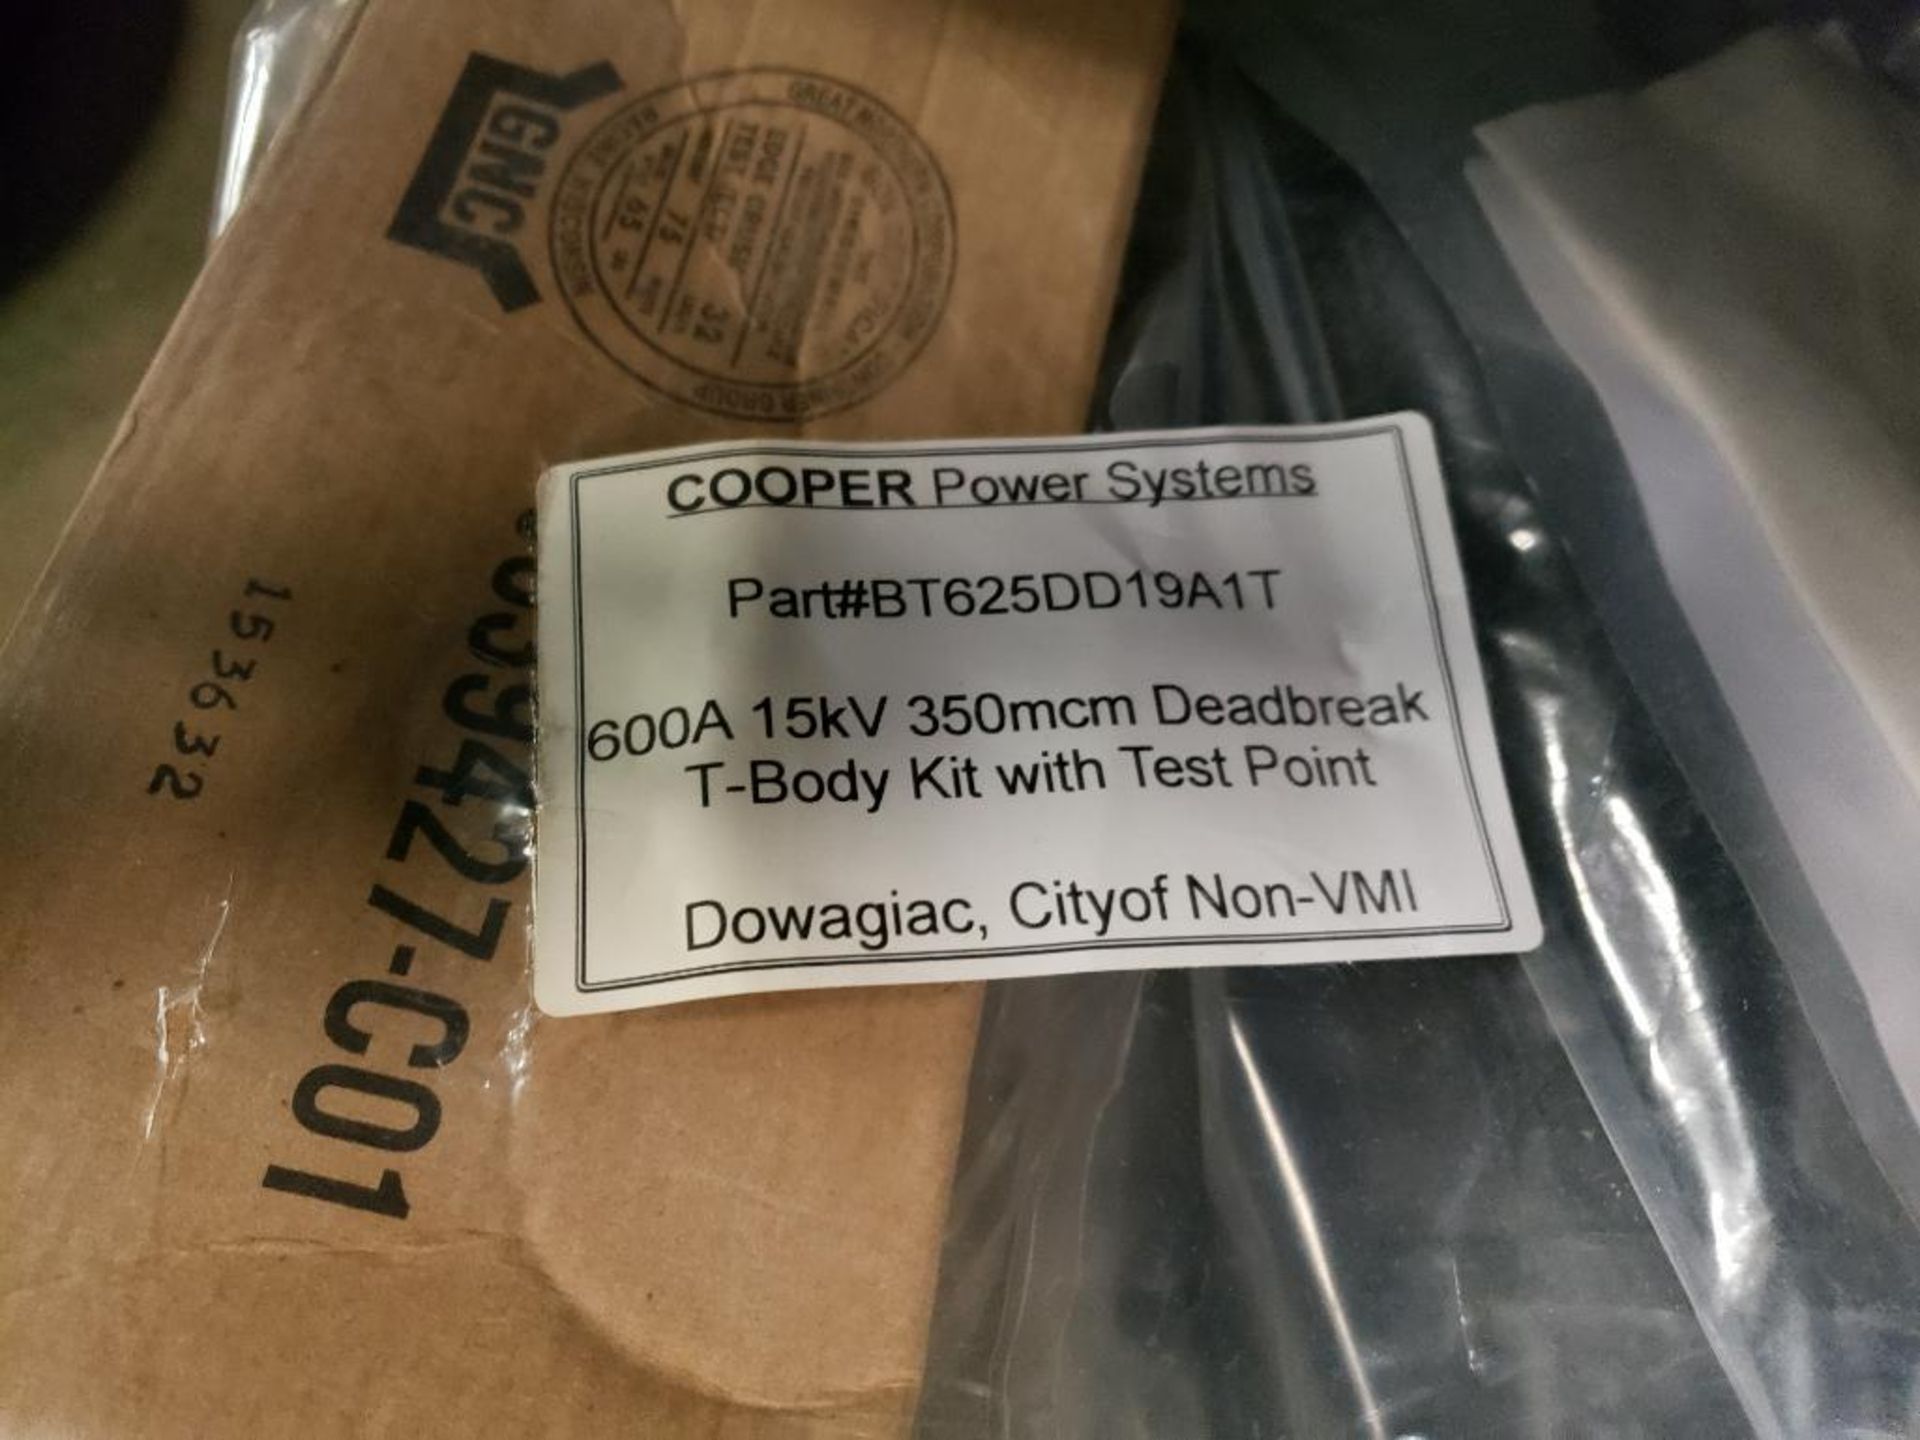 Qty 6 - Cooper Power 350mcm deadbreak kit. Part number BT625DD19A1T. - Image 5 of 6